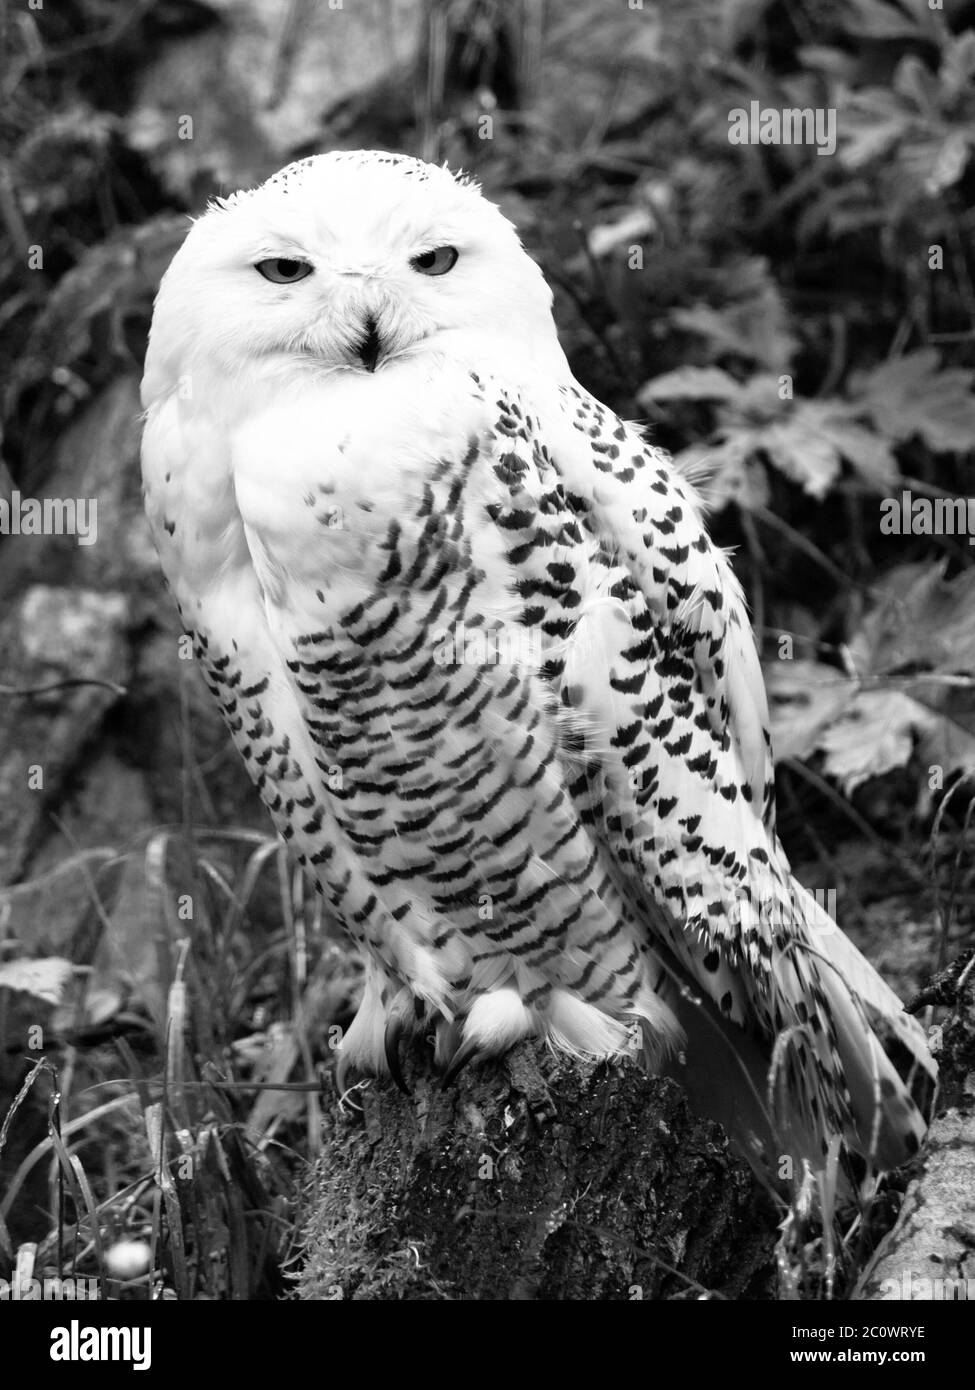 Snowy owl, Bubo scandiacus, sitting on the tree stump . Black and white image. Stock Photo